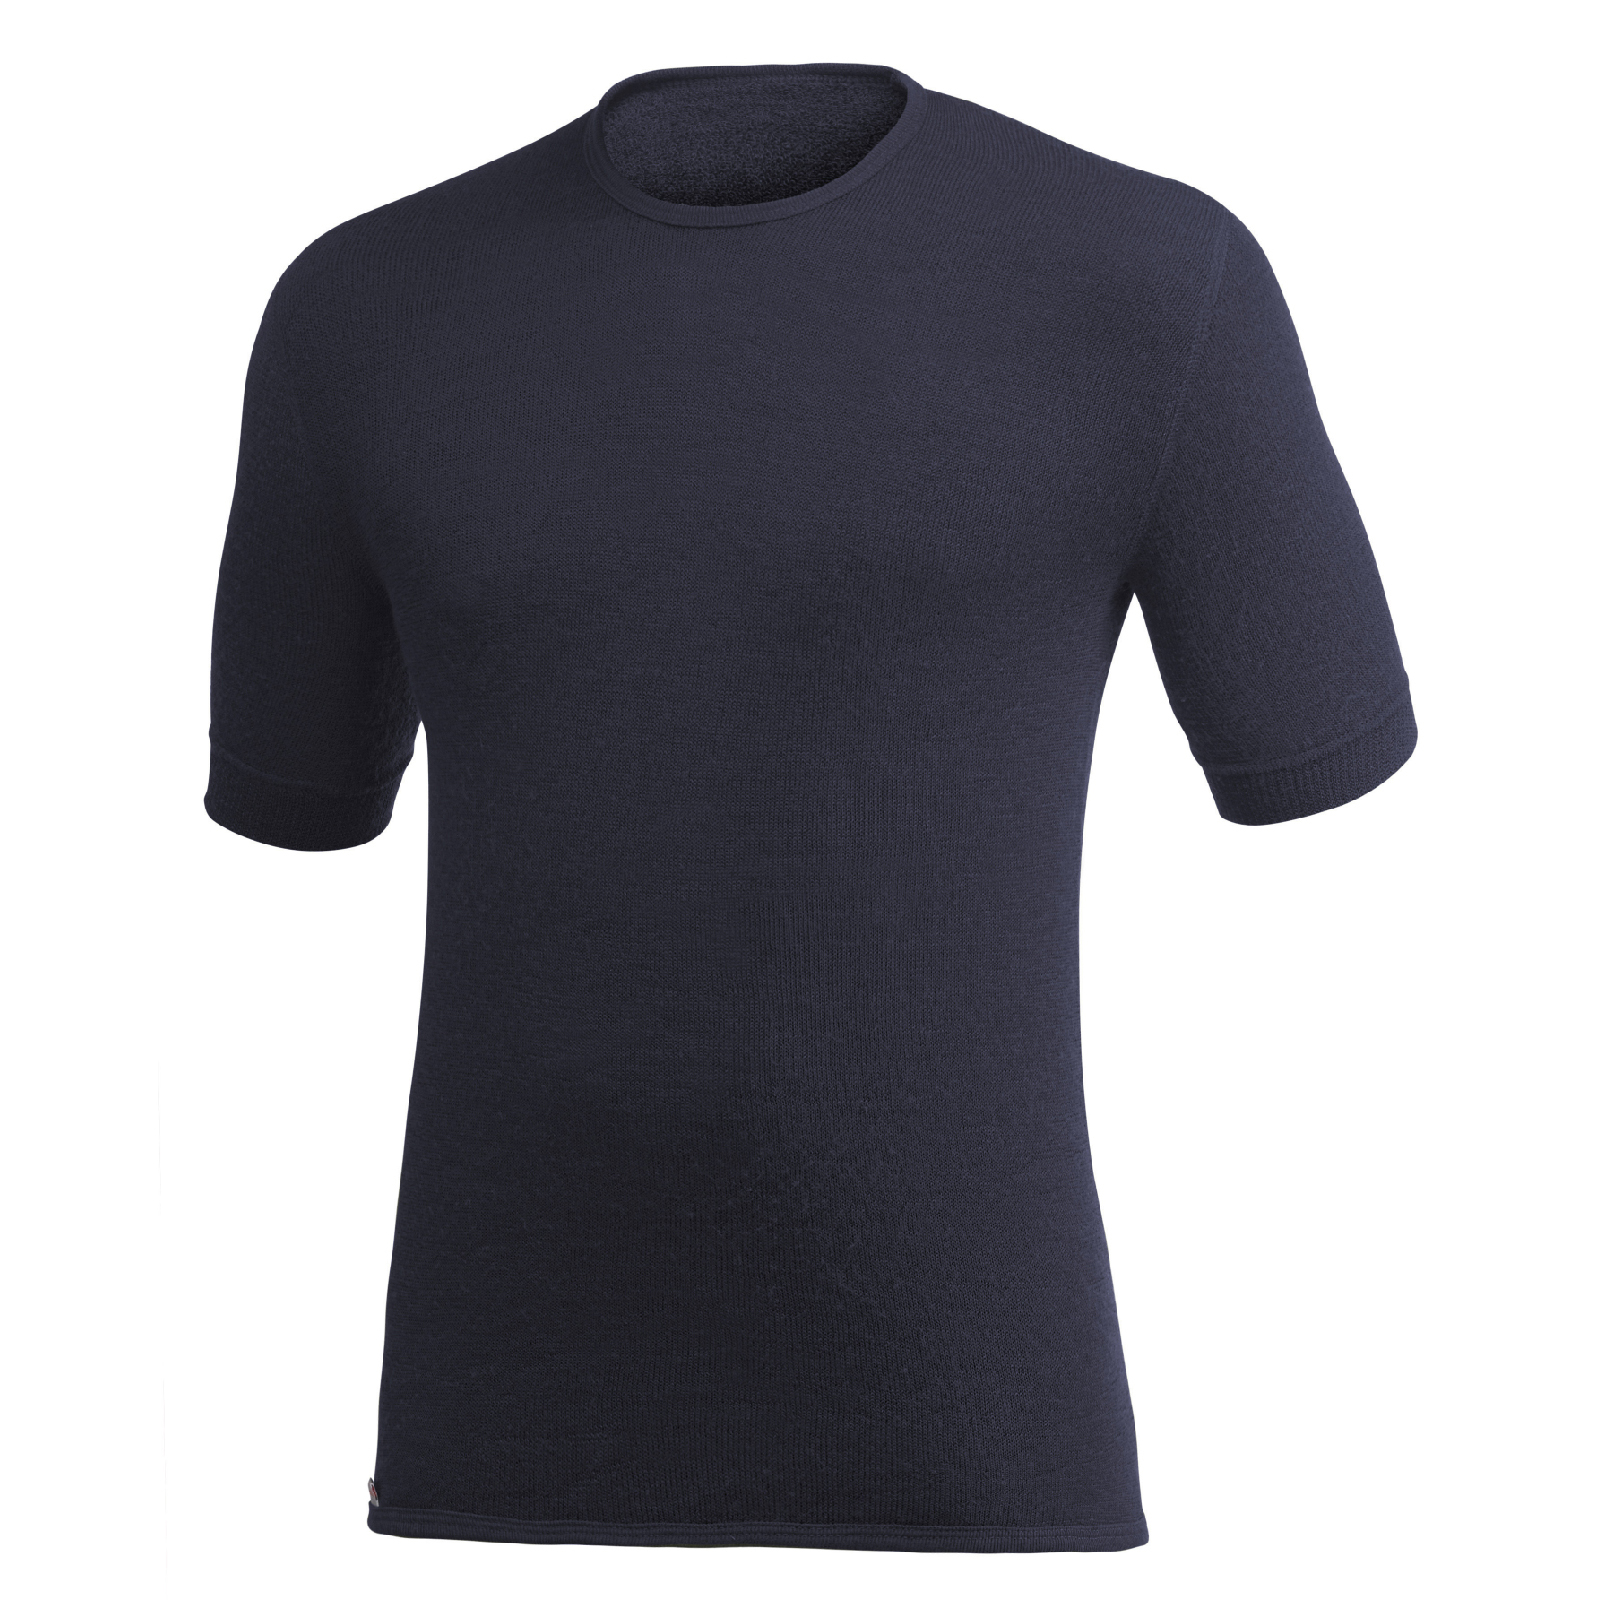 Woolpower Crewneck 200 Rundhalshemd  schwarz  Langarm-Shirt 